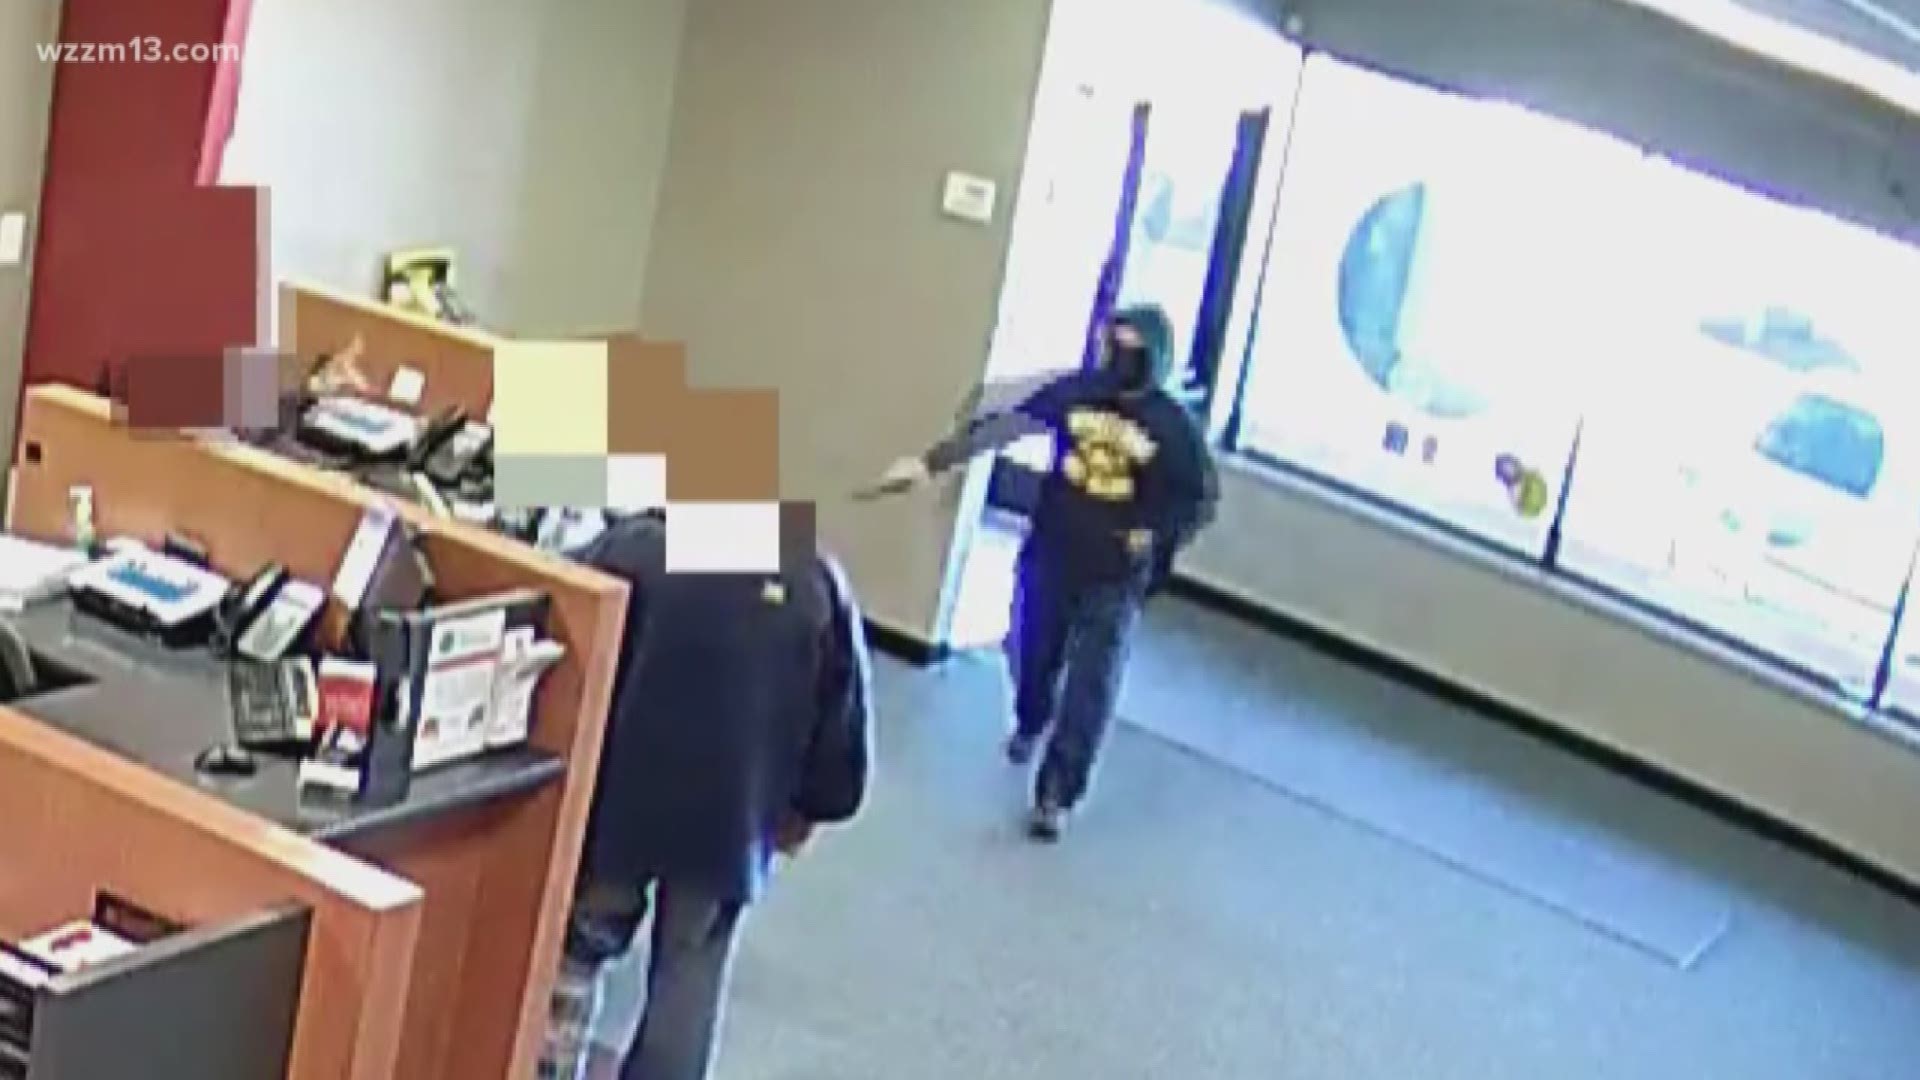 Cash advance store robberies